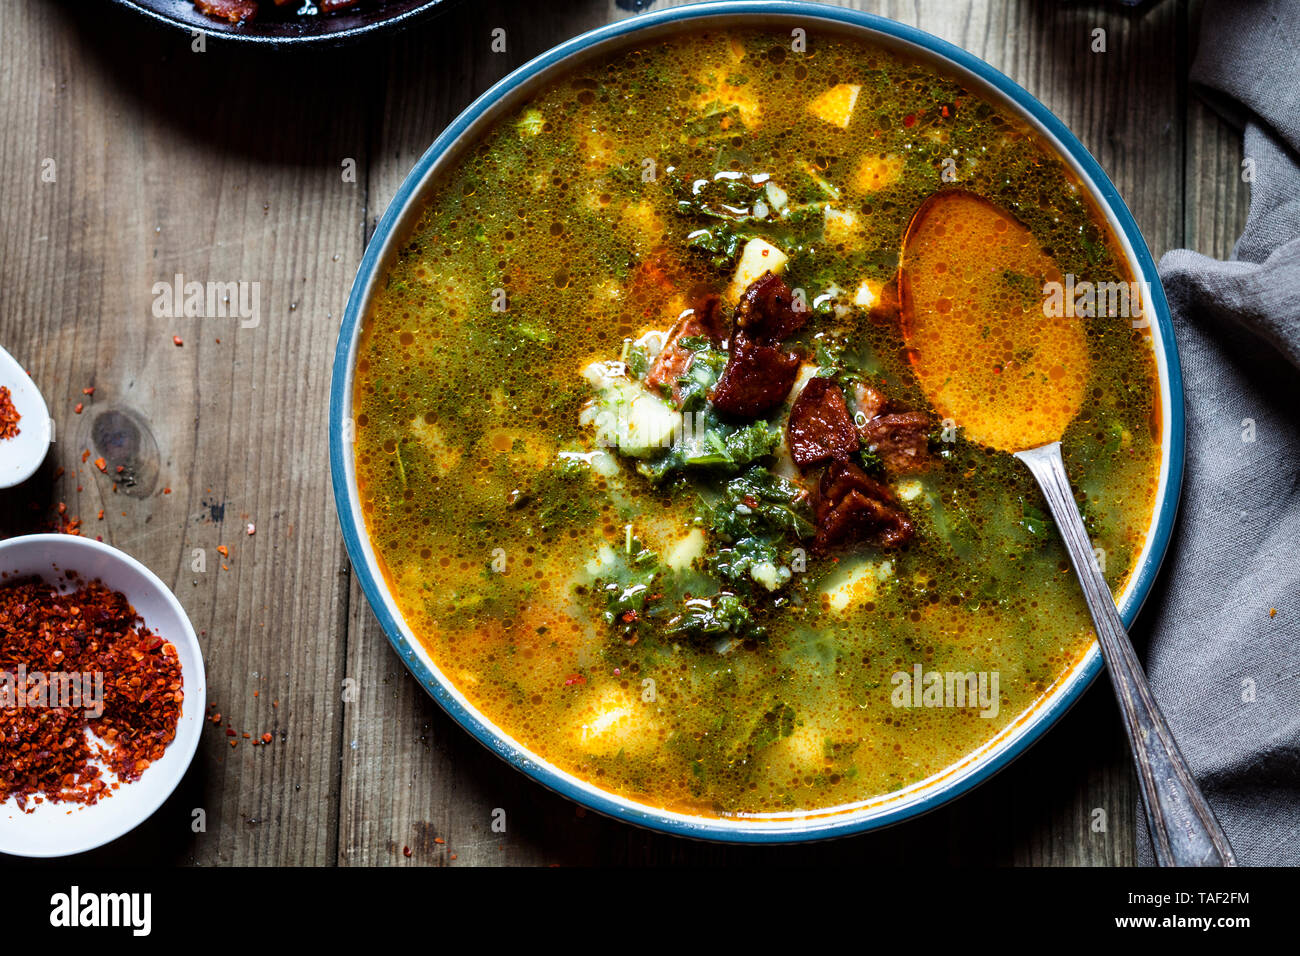 Caldo verde, soup with green cabbage, chorizo and potato Stock Photo